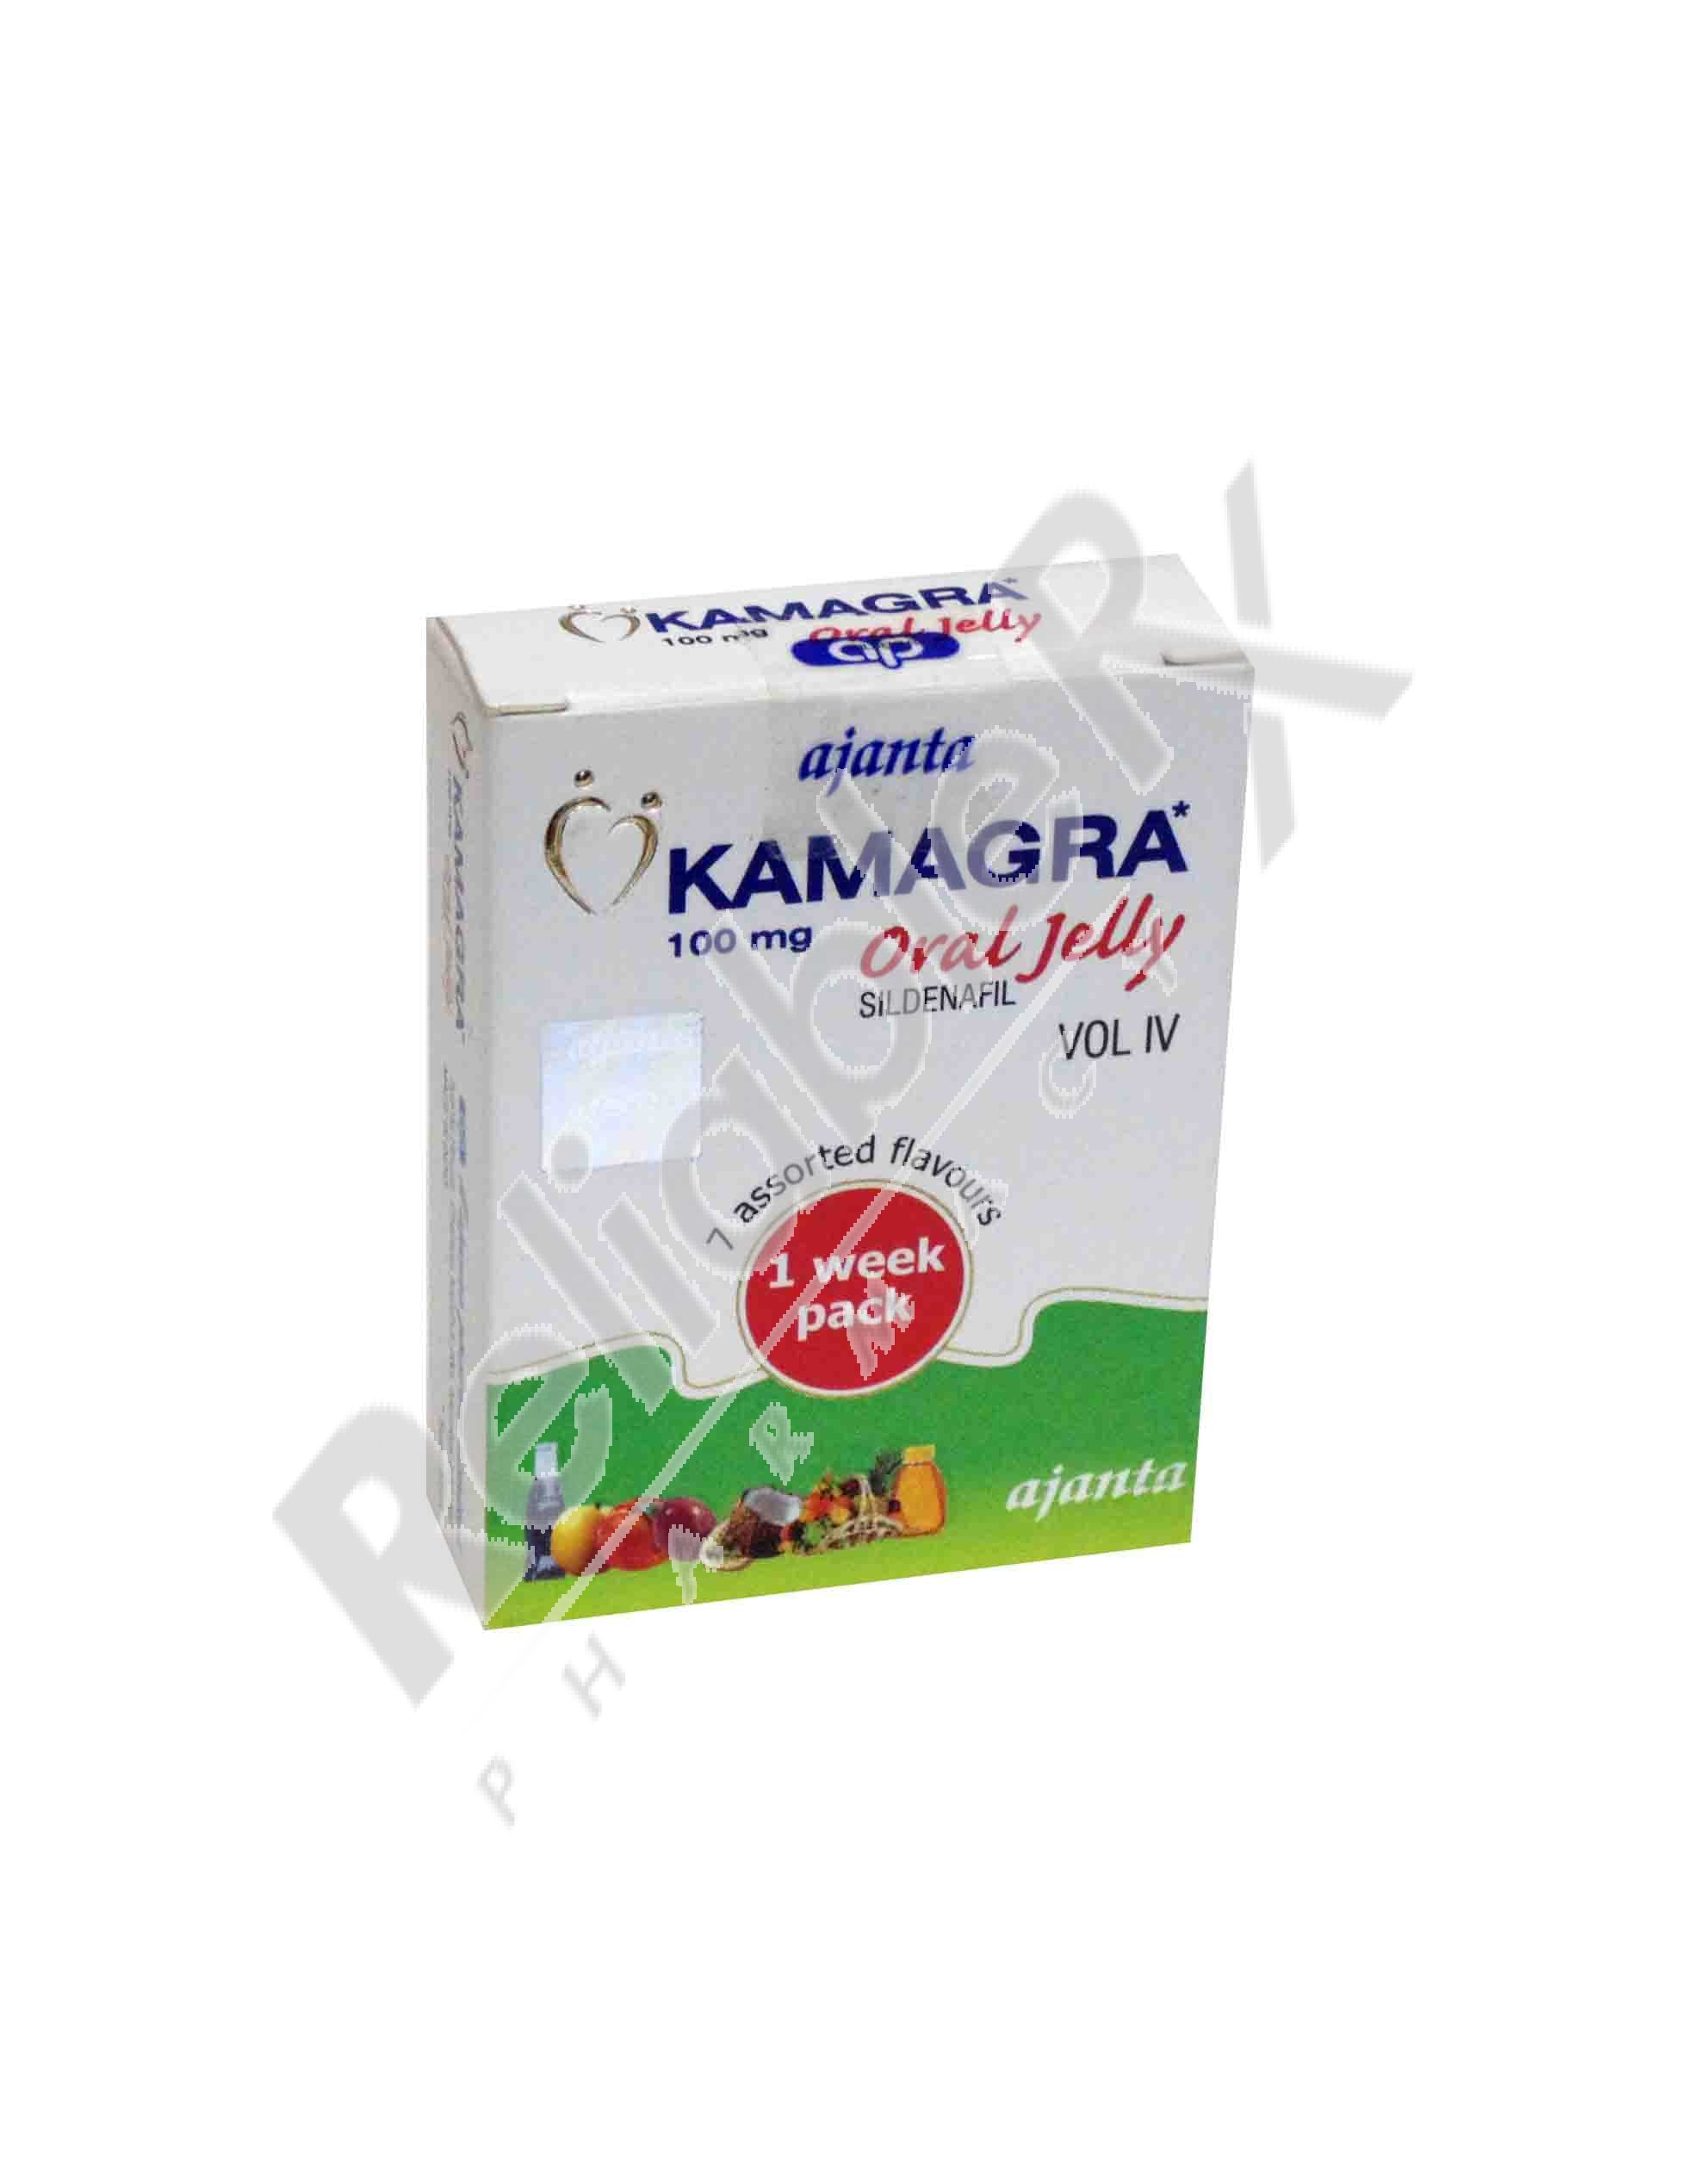 Buy Kamagra Oral Jelly Online | ReliableRxPharmacy
